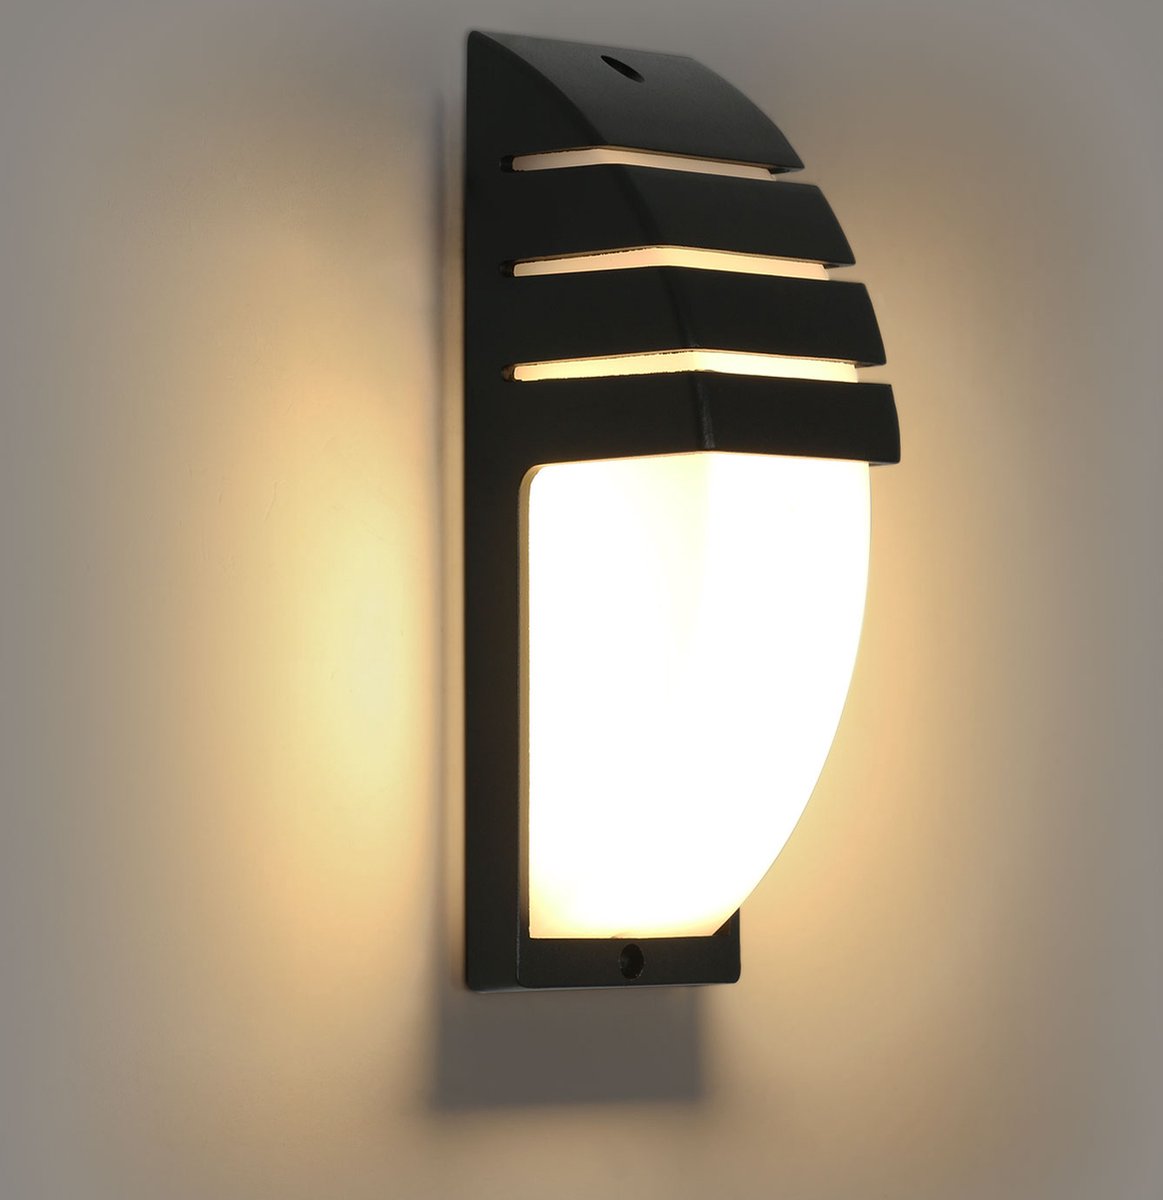 Delaveek-LED Wandlamp - 12W 1000LM - Warm Wit 3000K - Zwart - Regelbare Stralingshoek - IP65